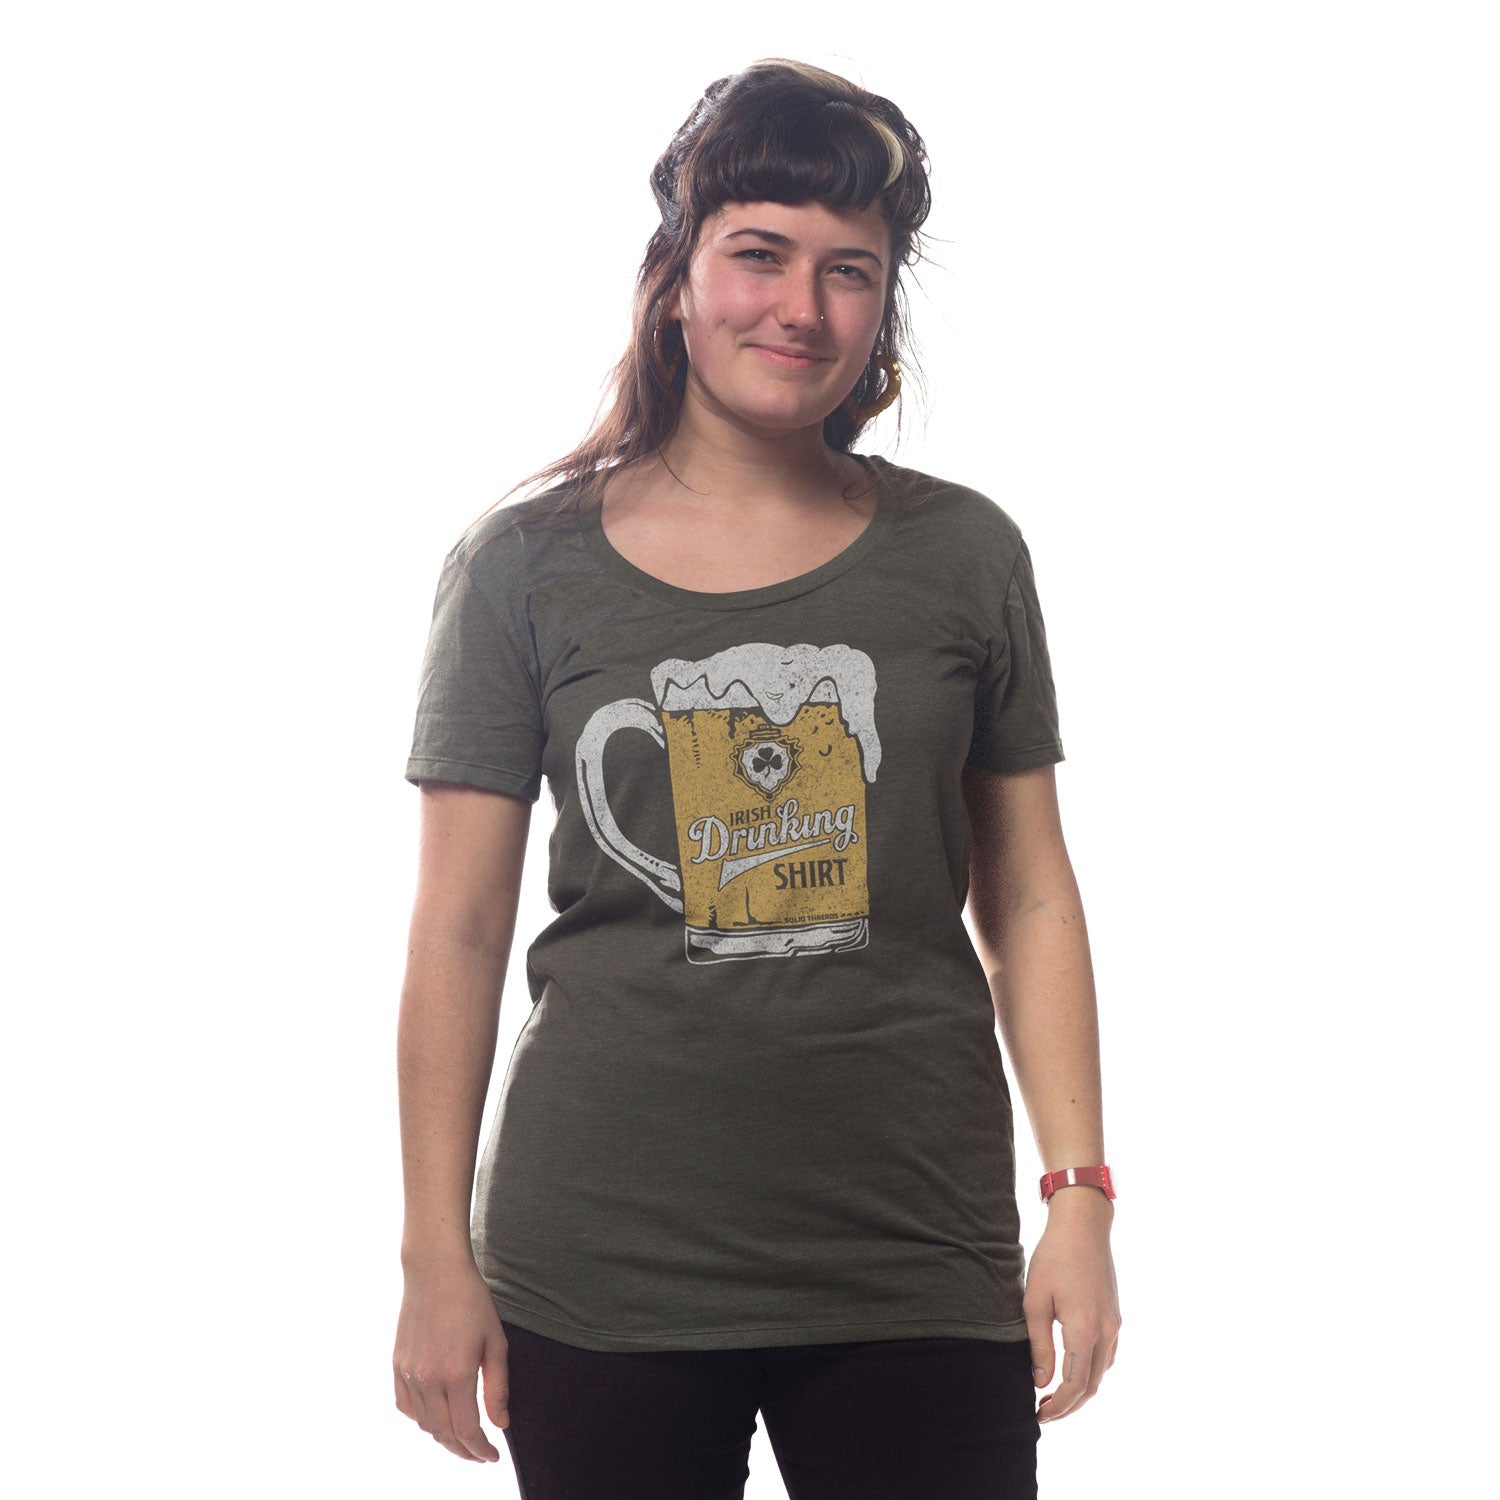 Women's Irish Drinking Shirt Vintage Graphic Tee | Retro St. Paddy's T-shirt on Model | Solid Threads